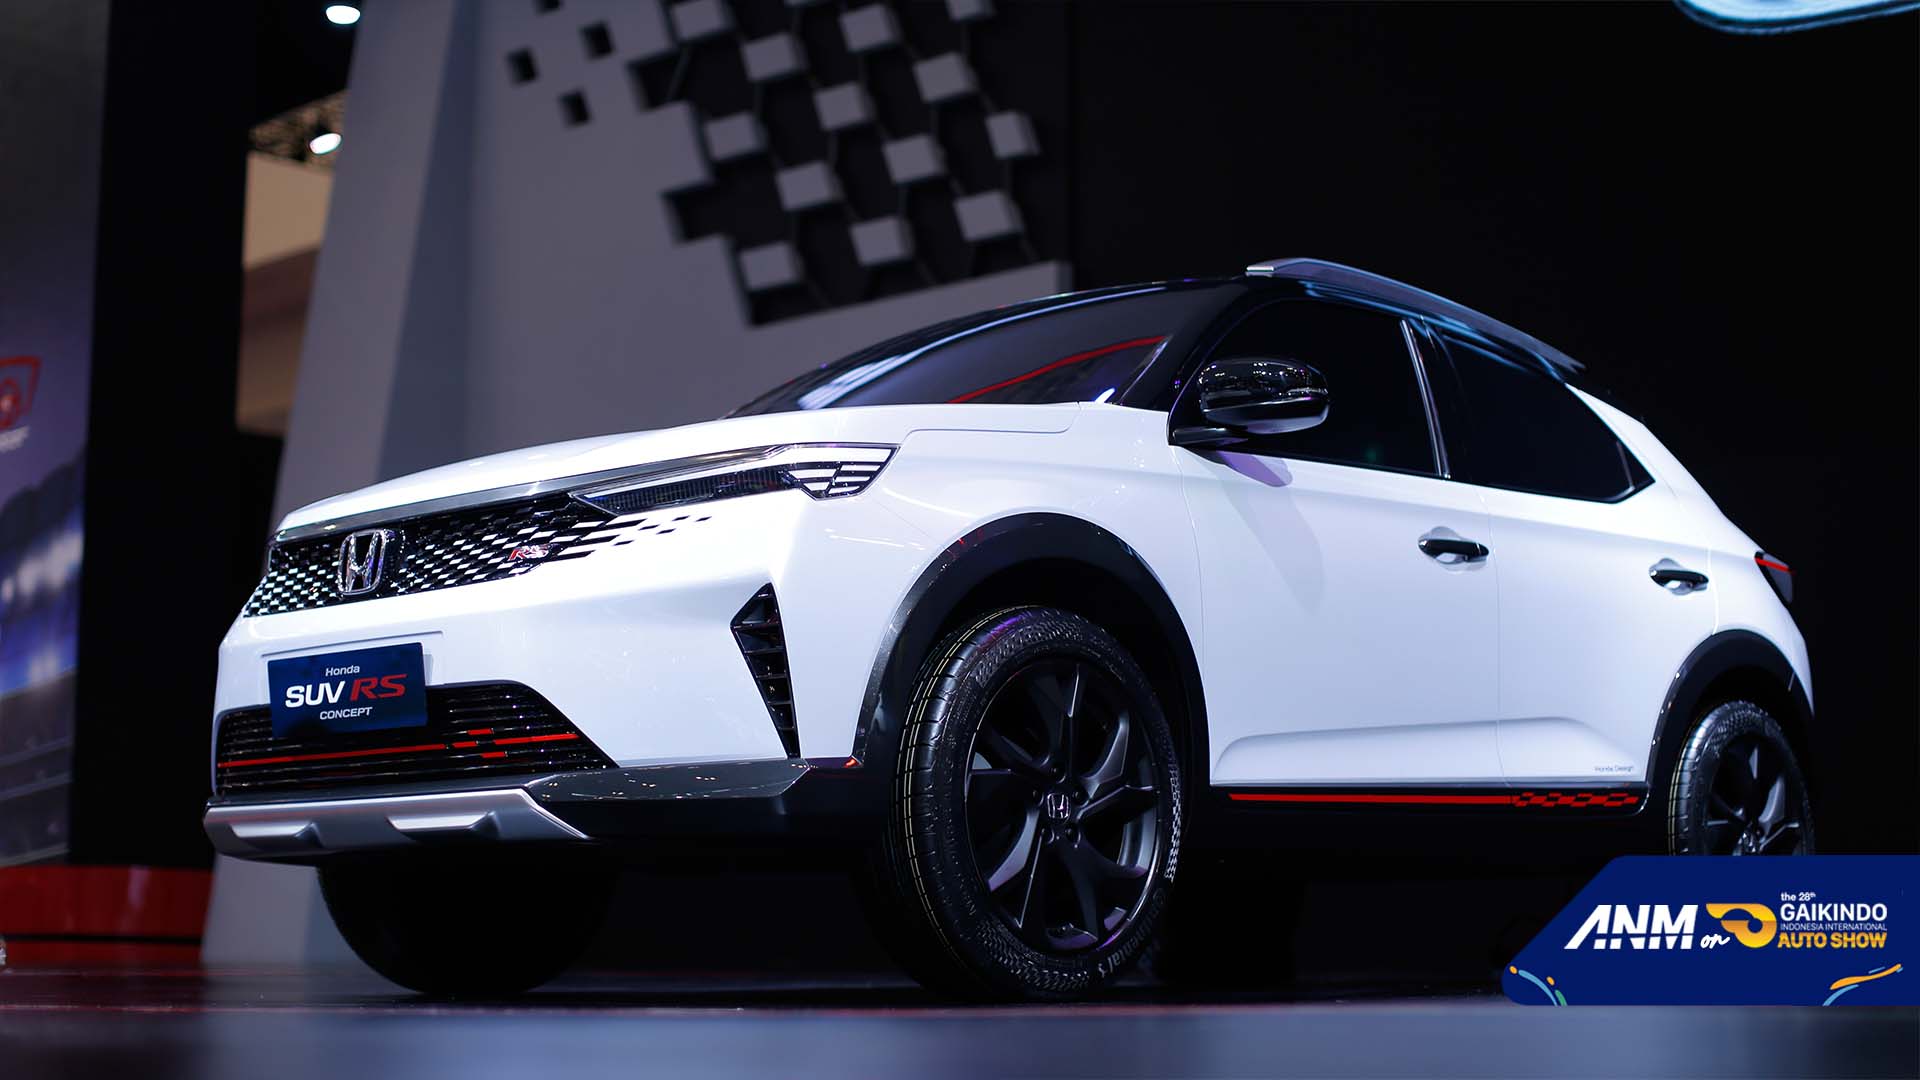 Berita, Model baru Honda SUV RS Concept: GIIAS 2021 : Foto Lengkap Honda SUV RS Concept, Emang Ganteng!